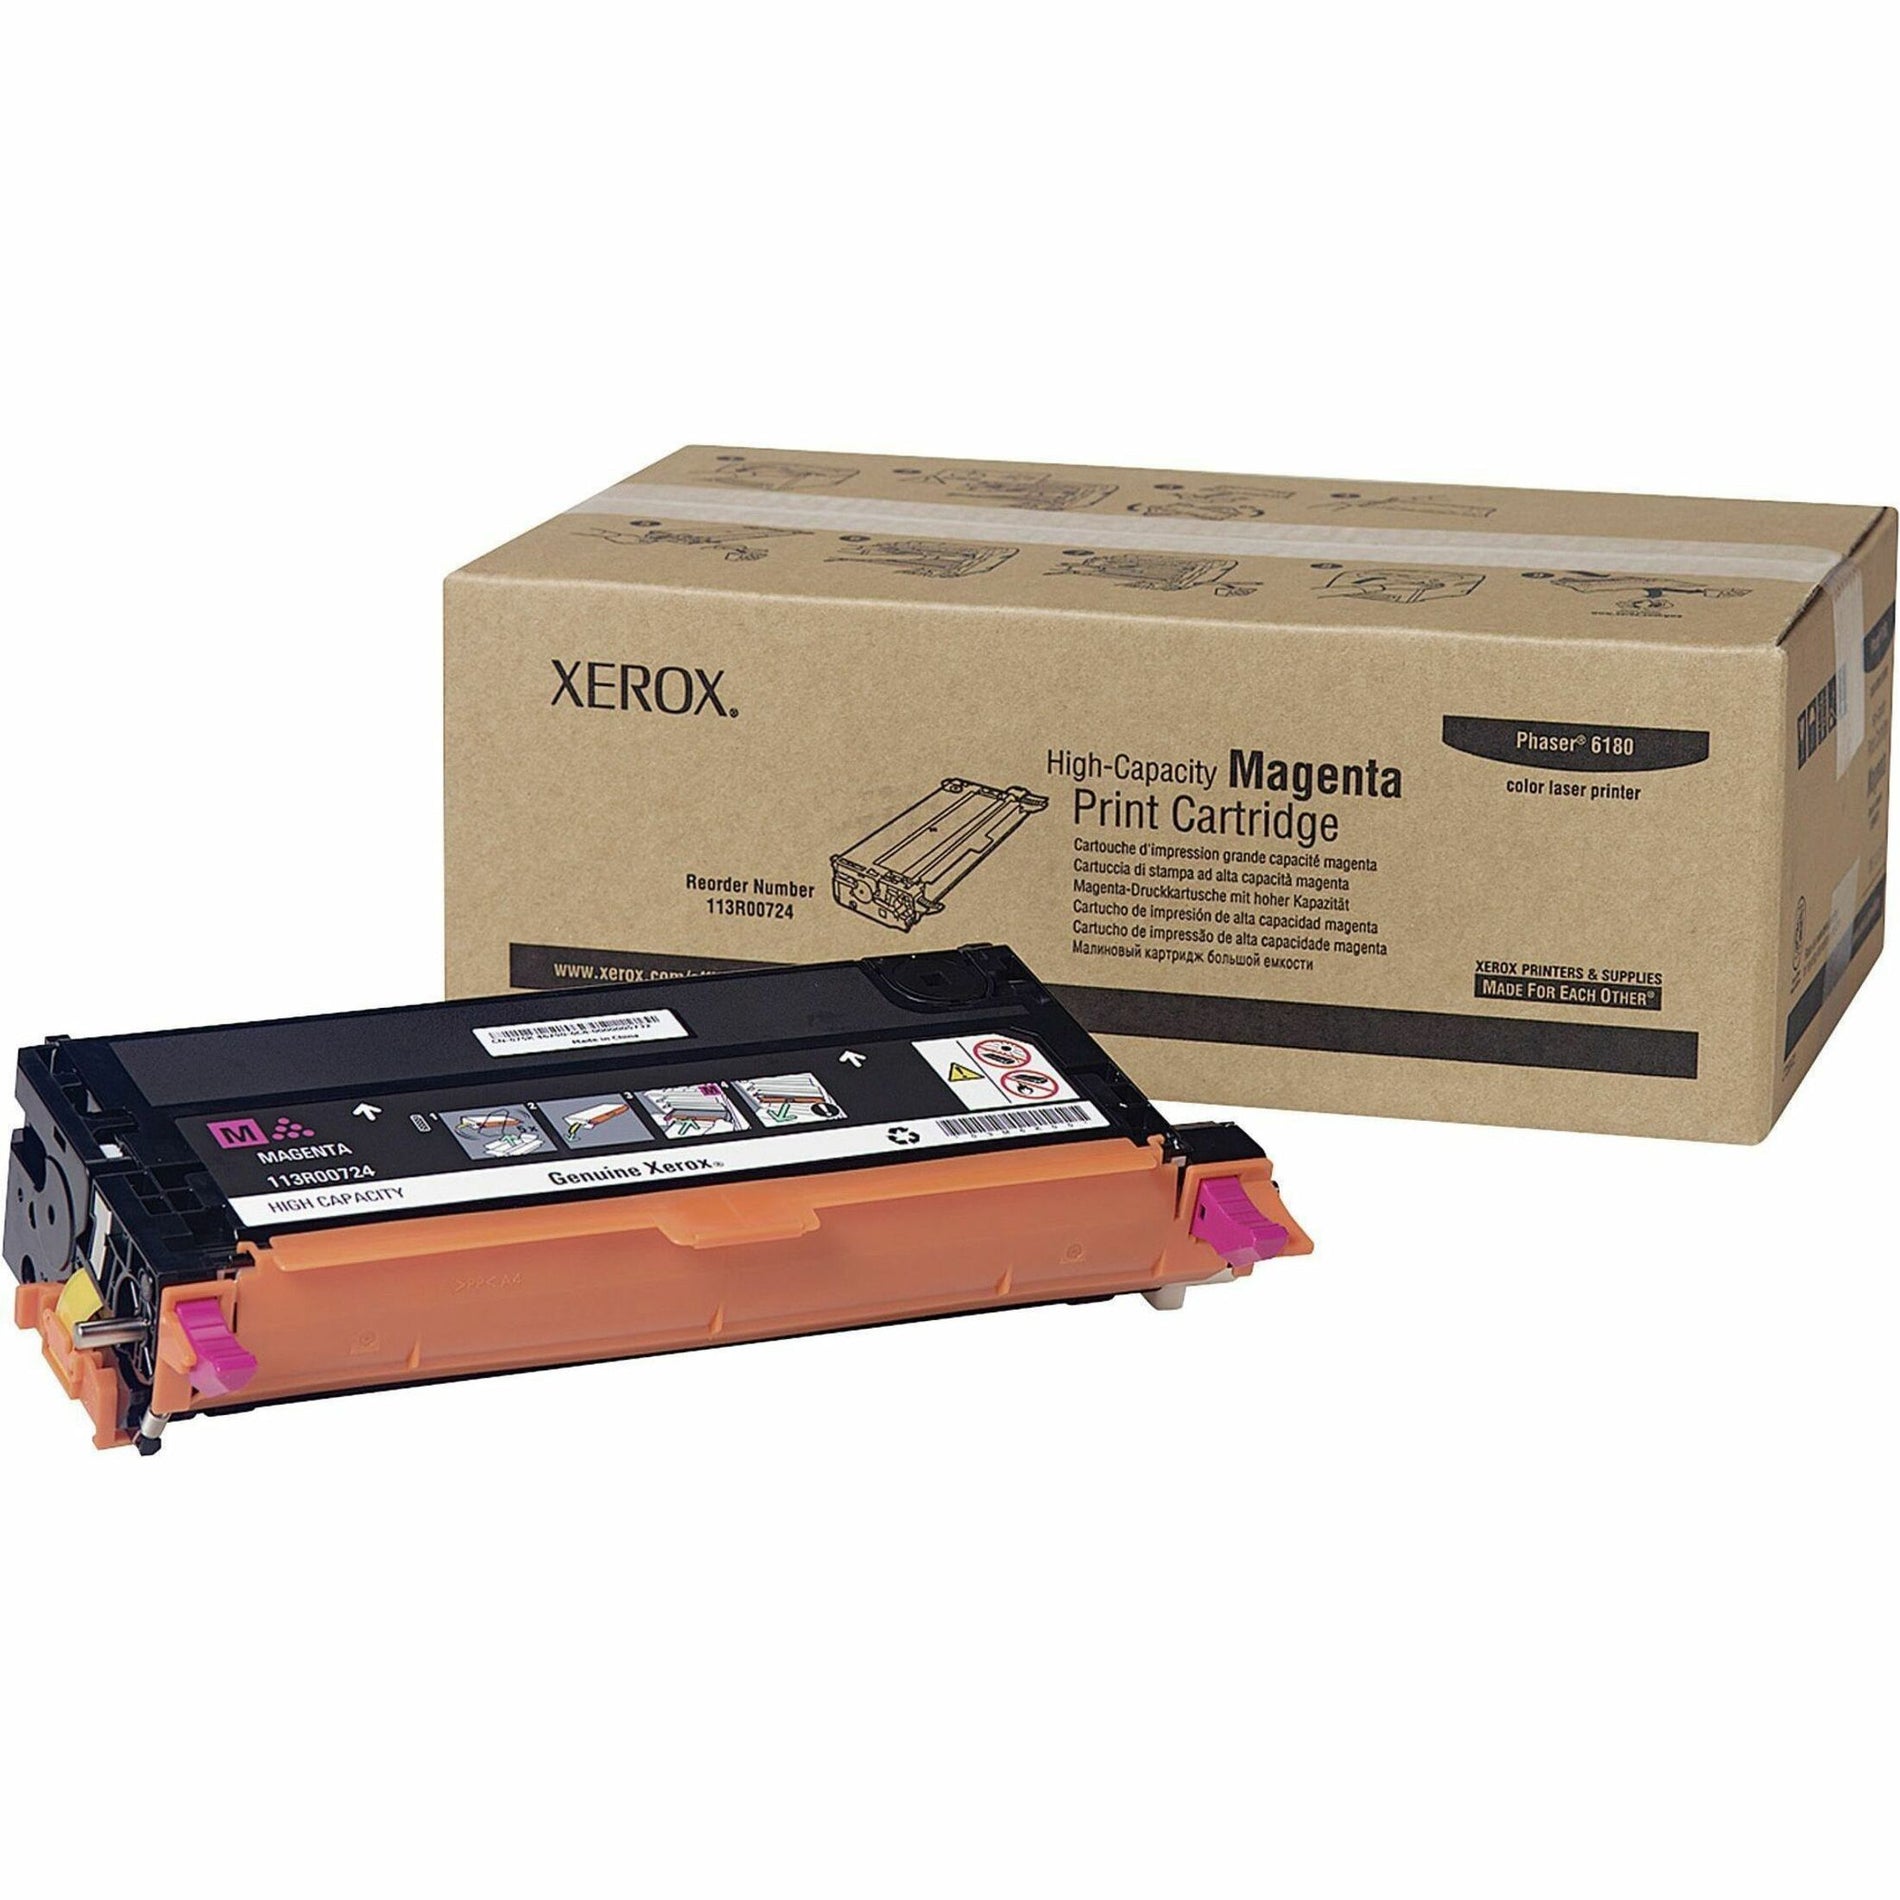 Xerox 113R00724 Phaser 6180 High Capacity Print Cartridge, Magenta - Laser Toner Cartridge